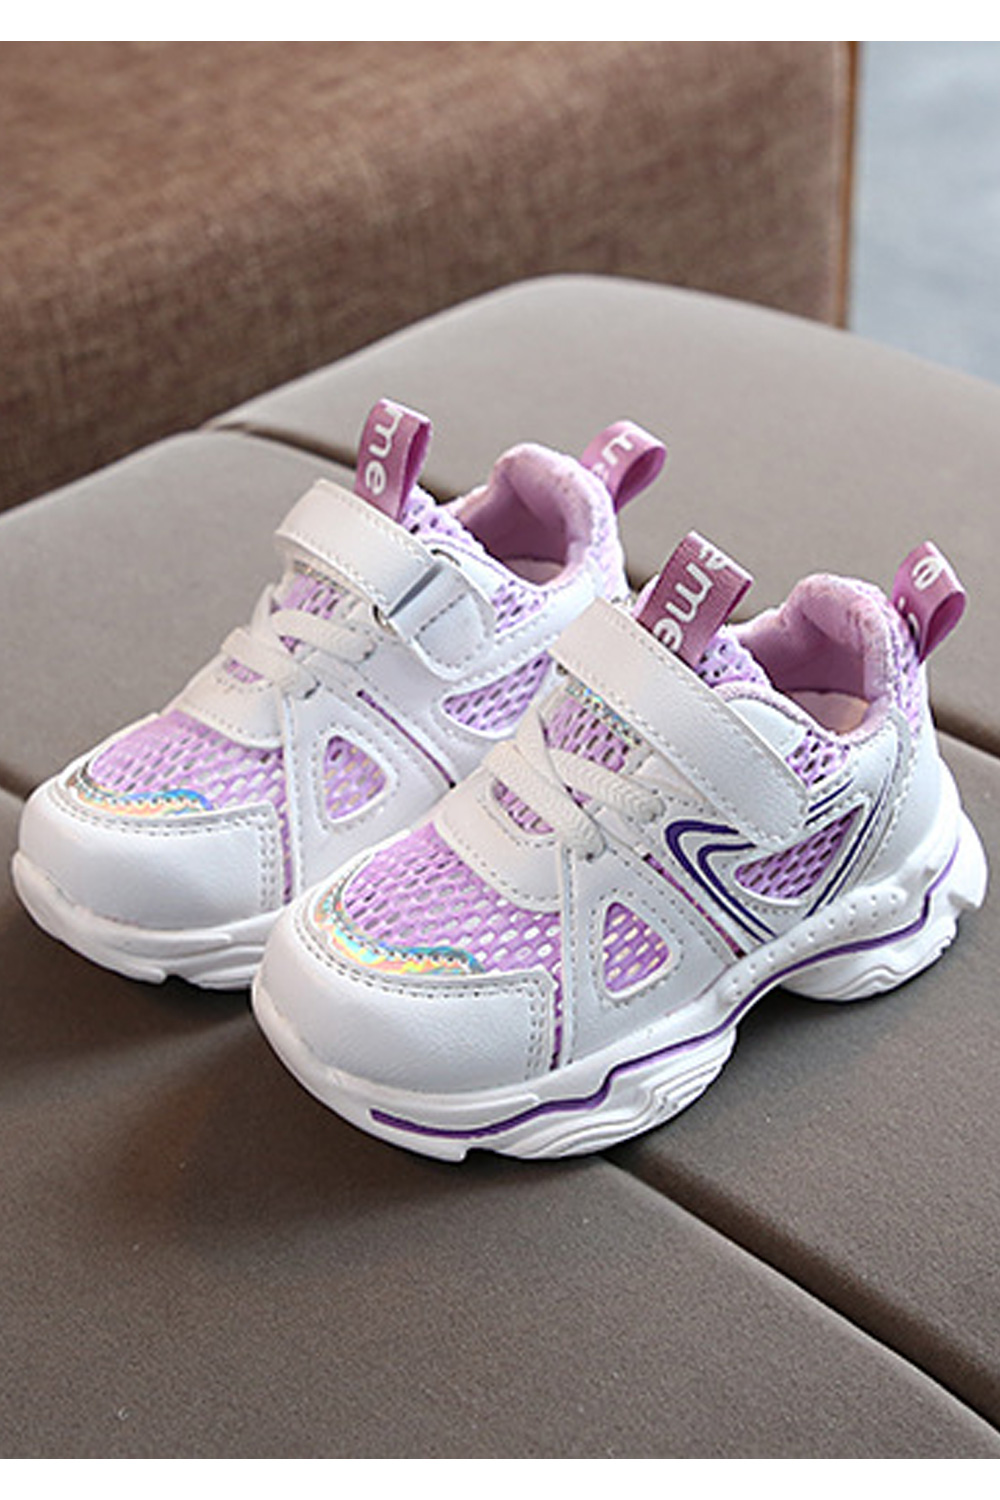 Selected Color is 2008 fluorescent net shoes purple